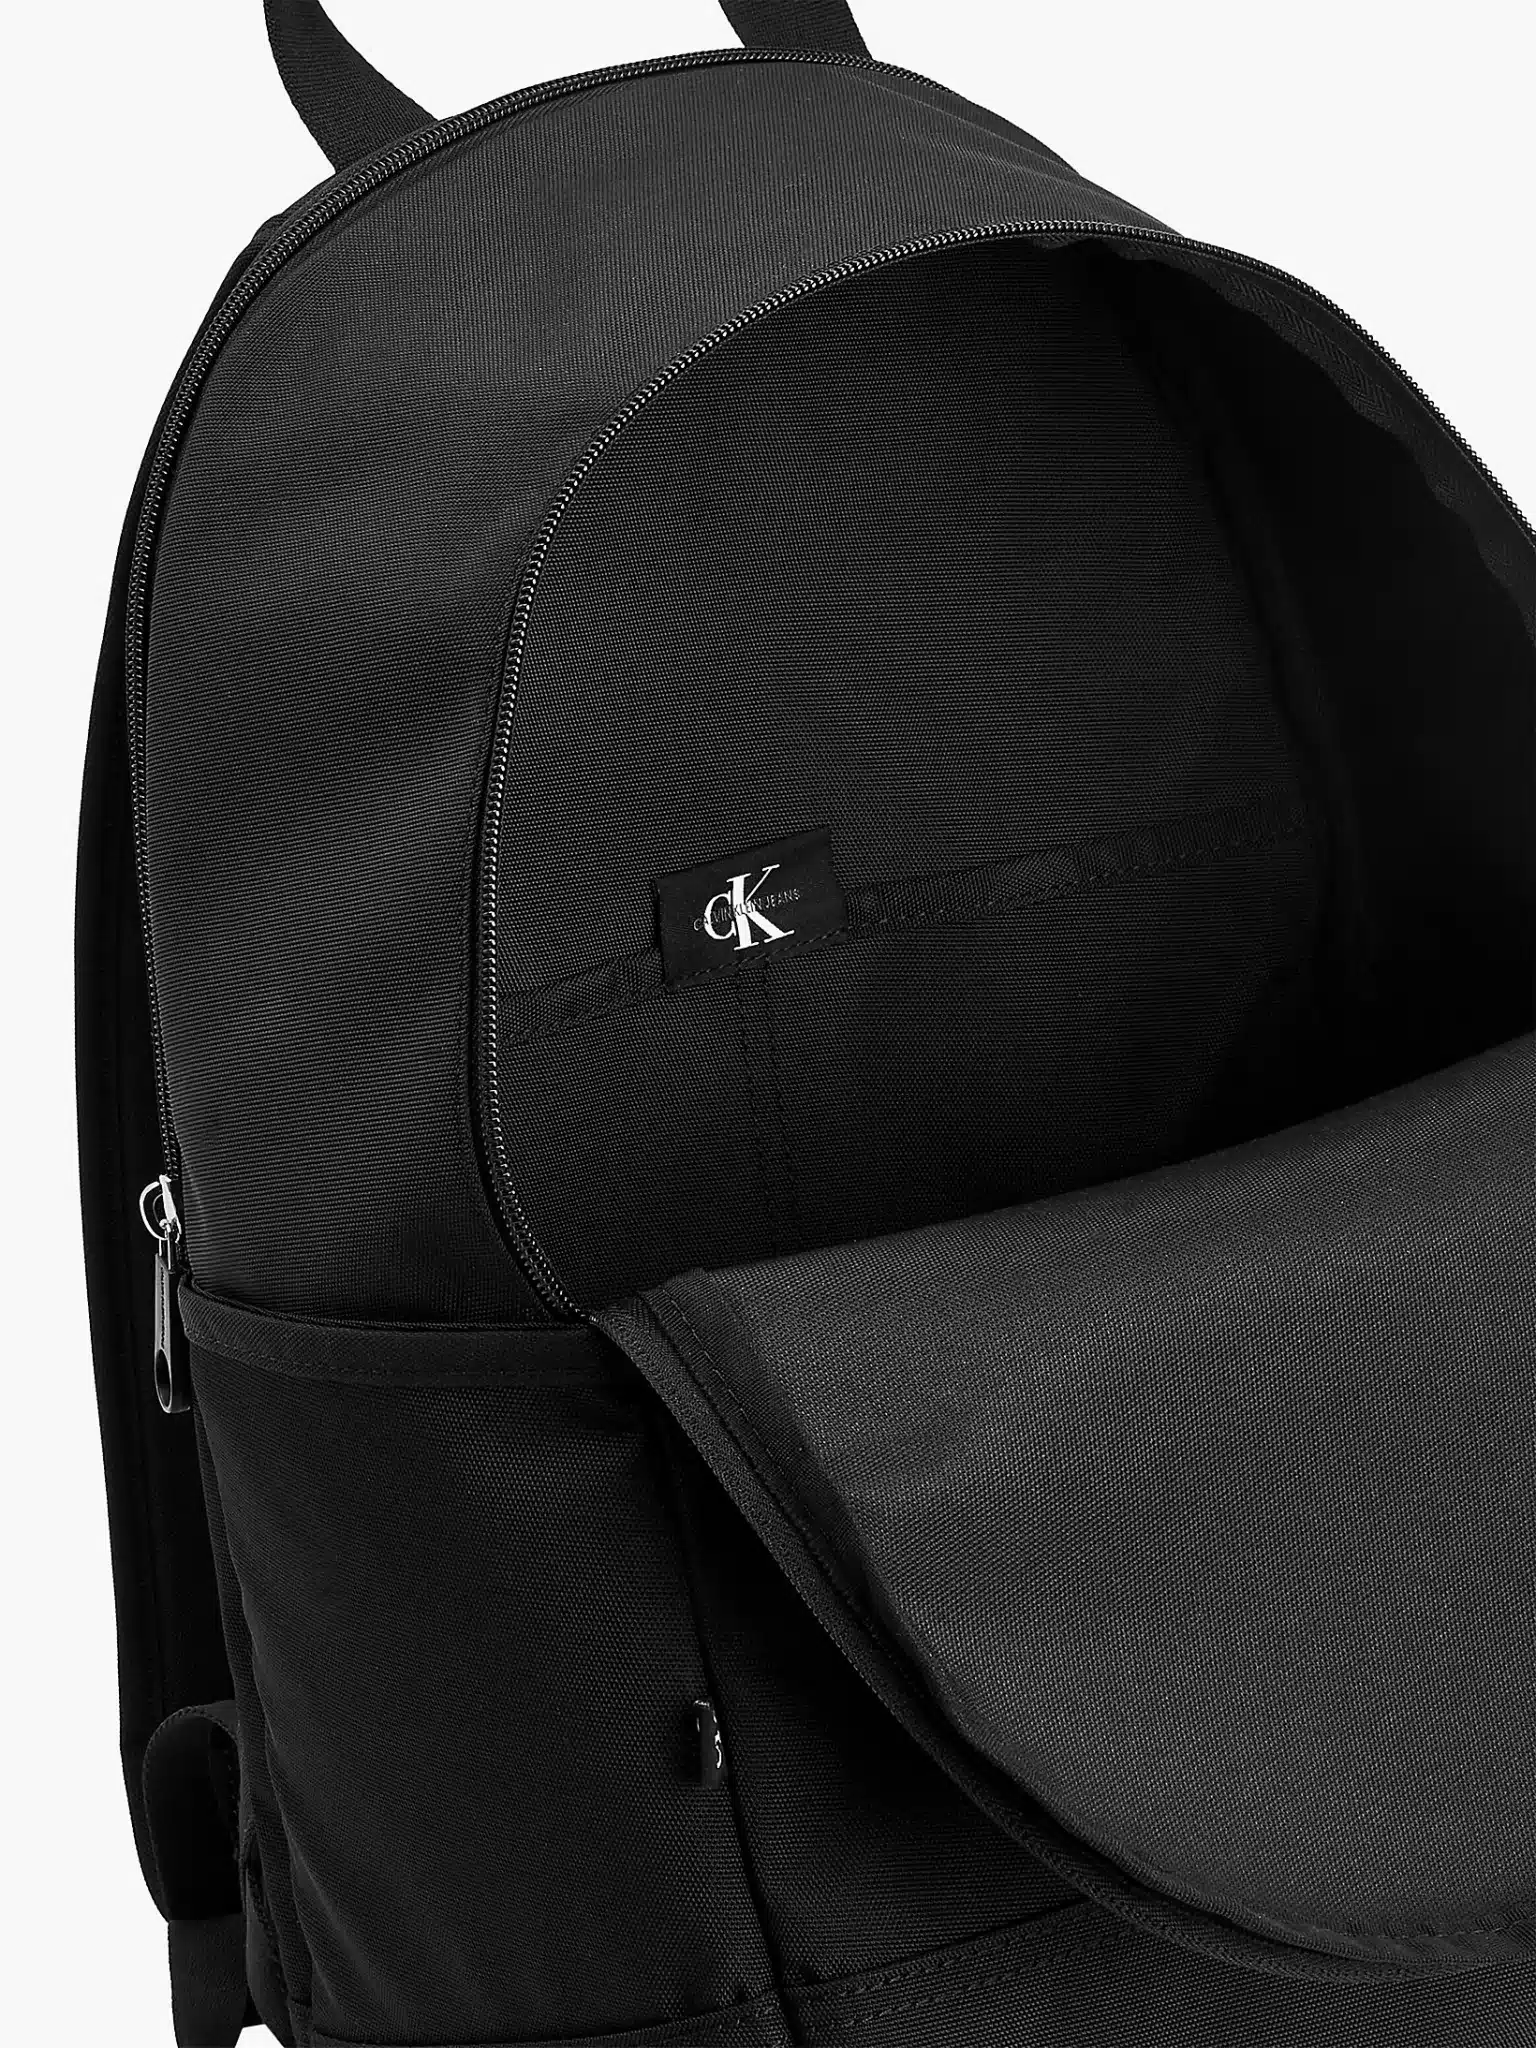 Buy Calvin Klein Round Backpack Black - Scandinavian Fashion Store